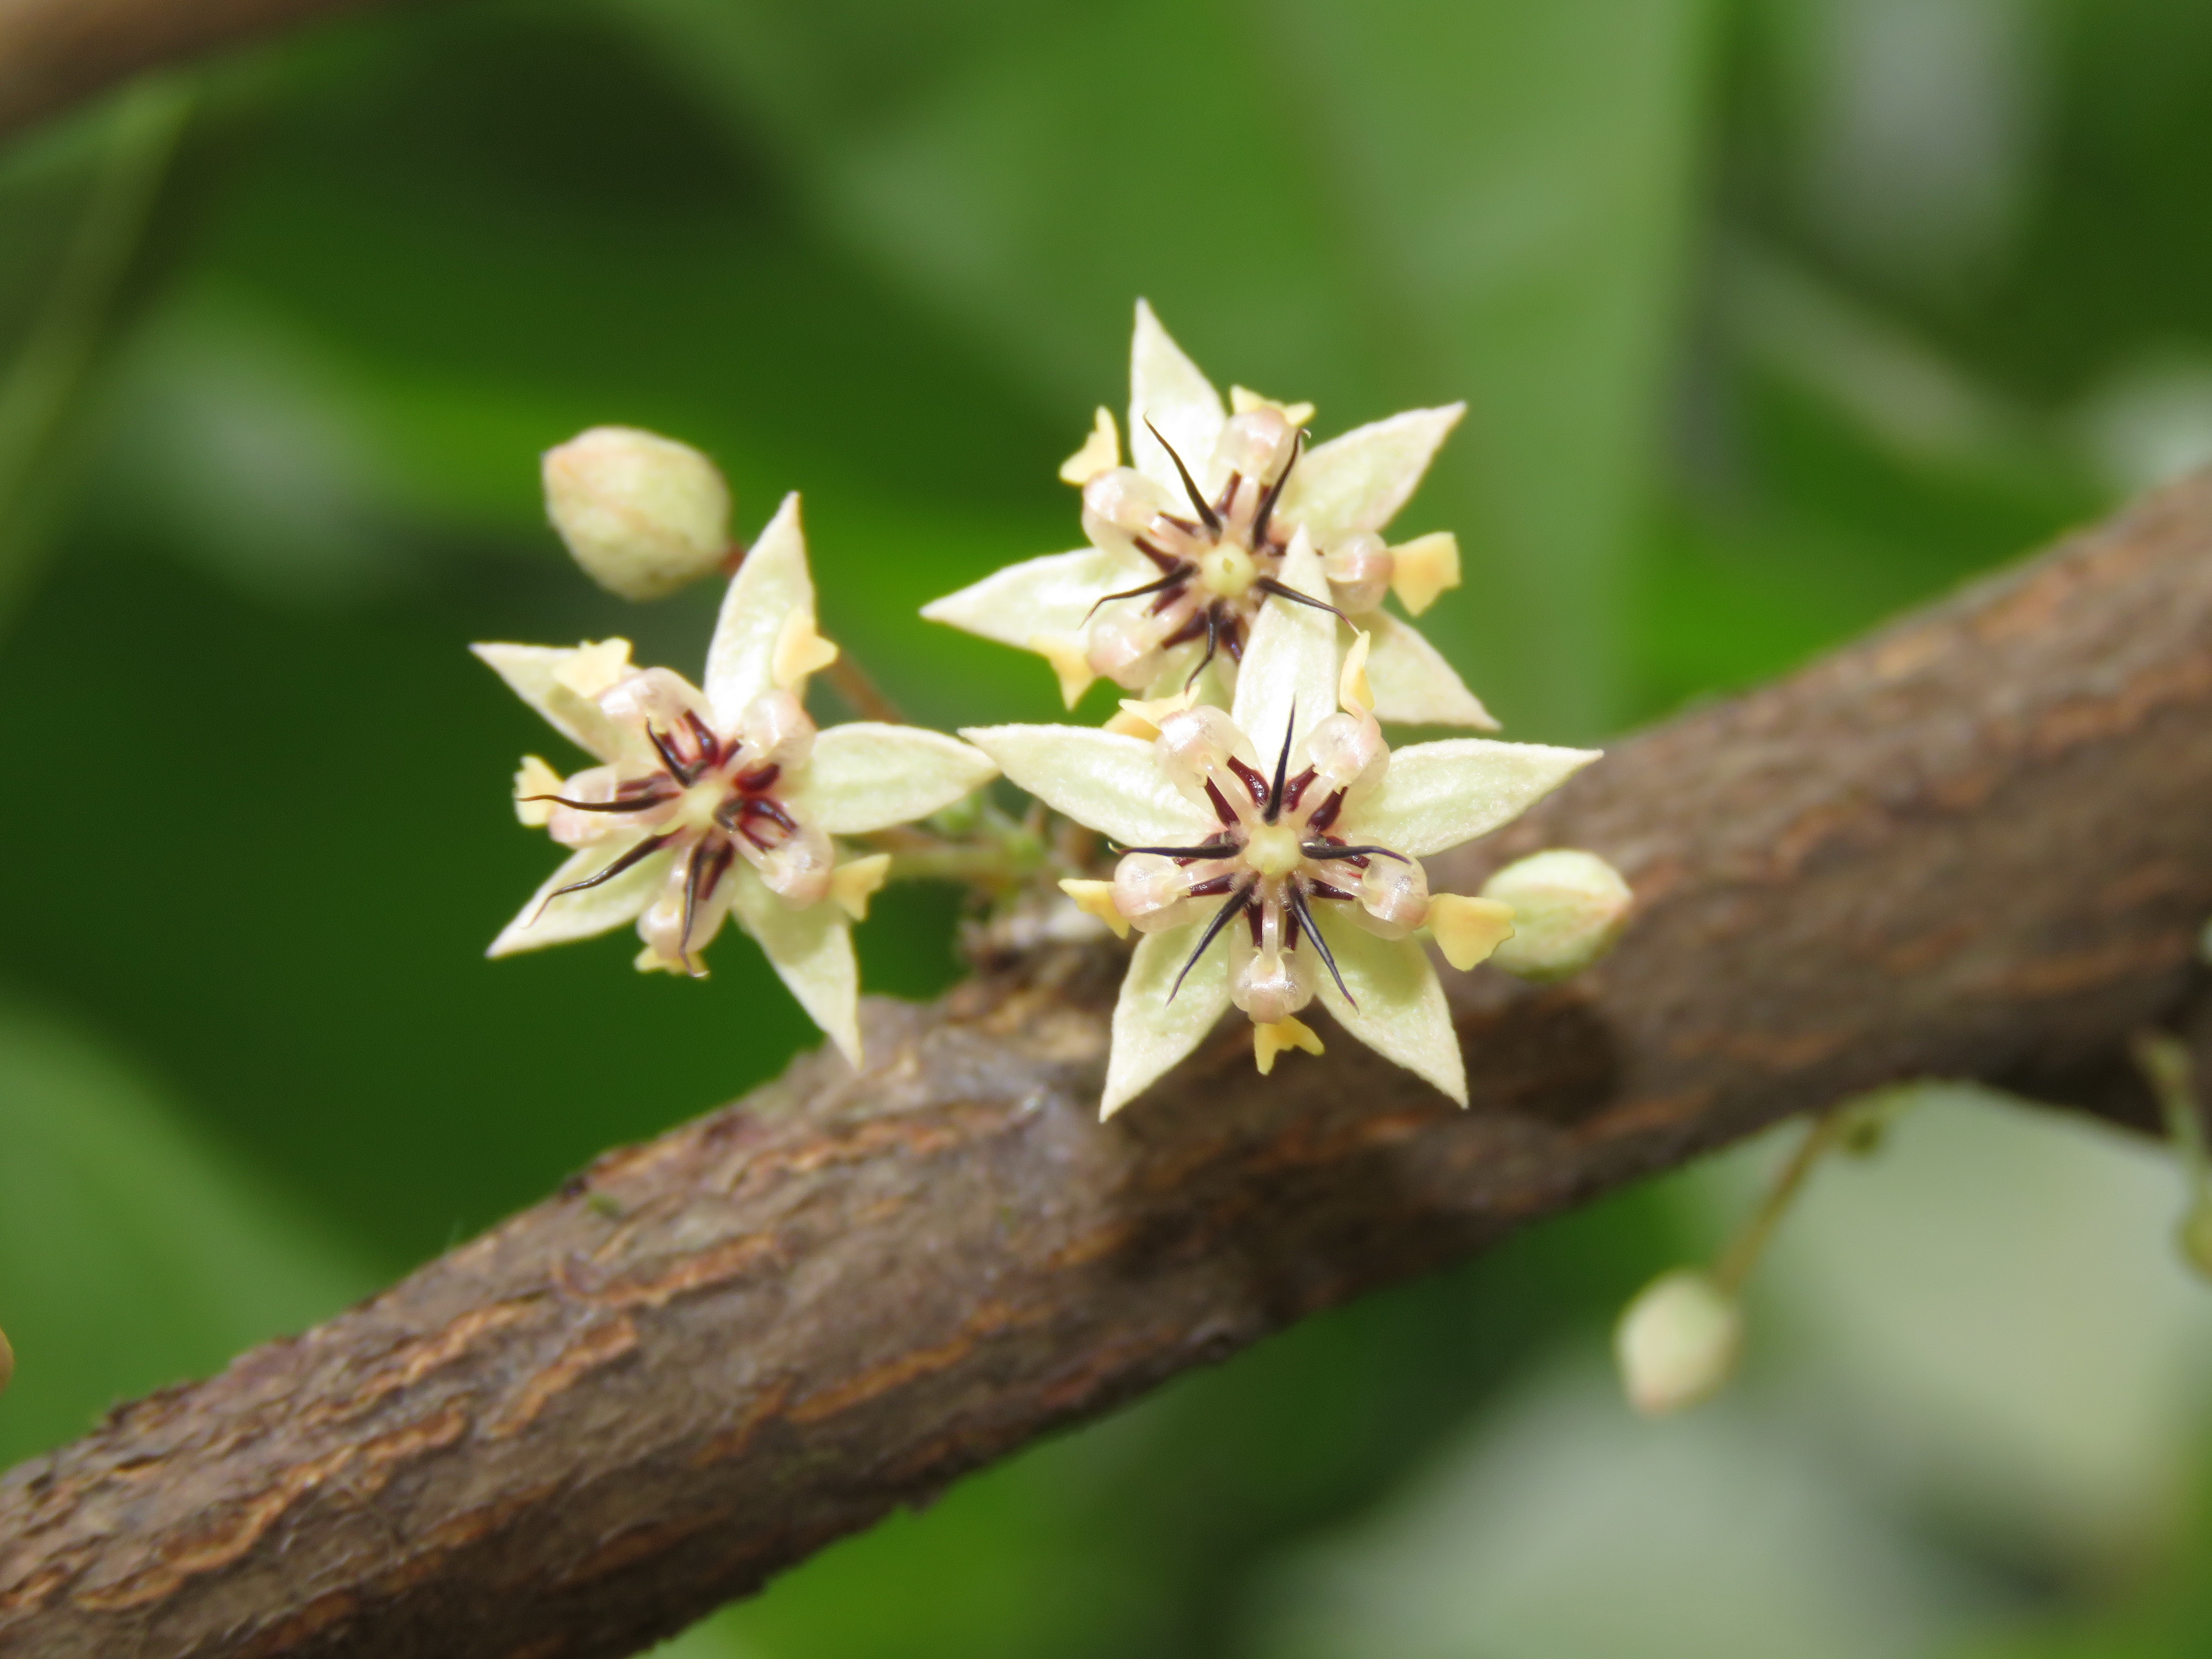 [IMAGE:https://upload.wikimedia.org/wikipedia/commons/e/e6/Theobroma_cacao_flowers_at_Kunnathurpadi_%285%29.jpg]